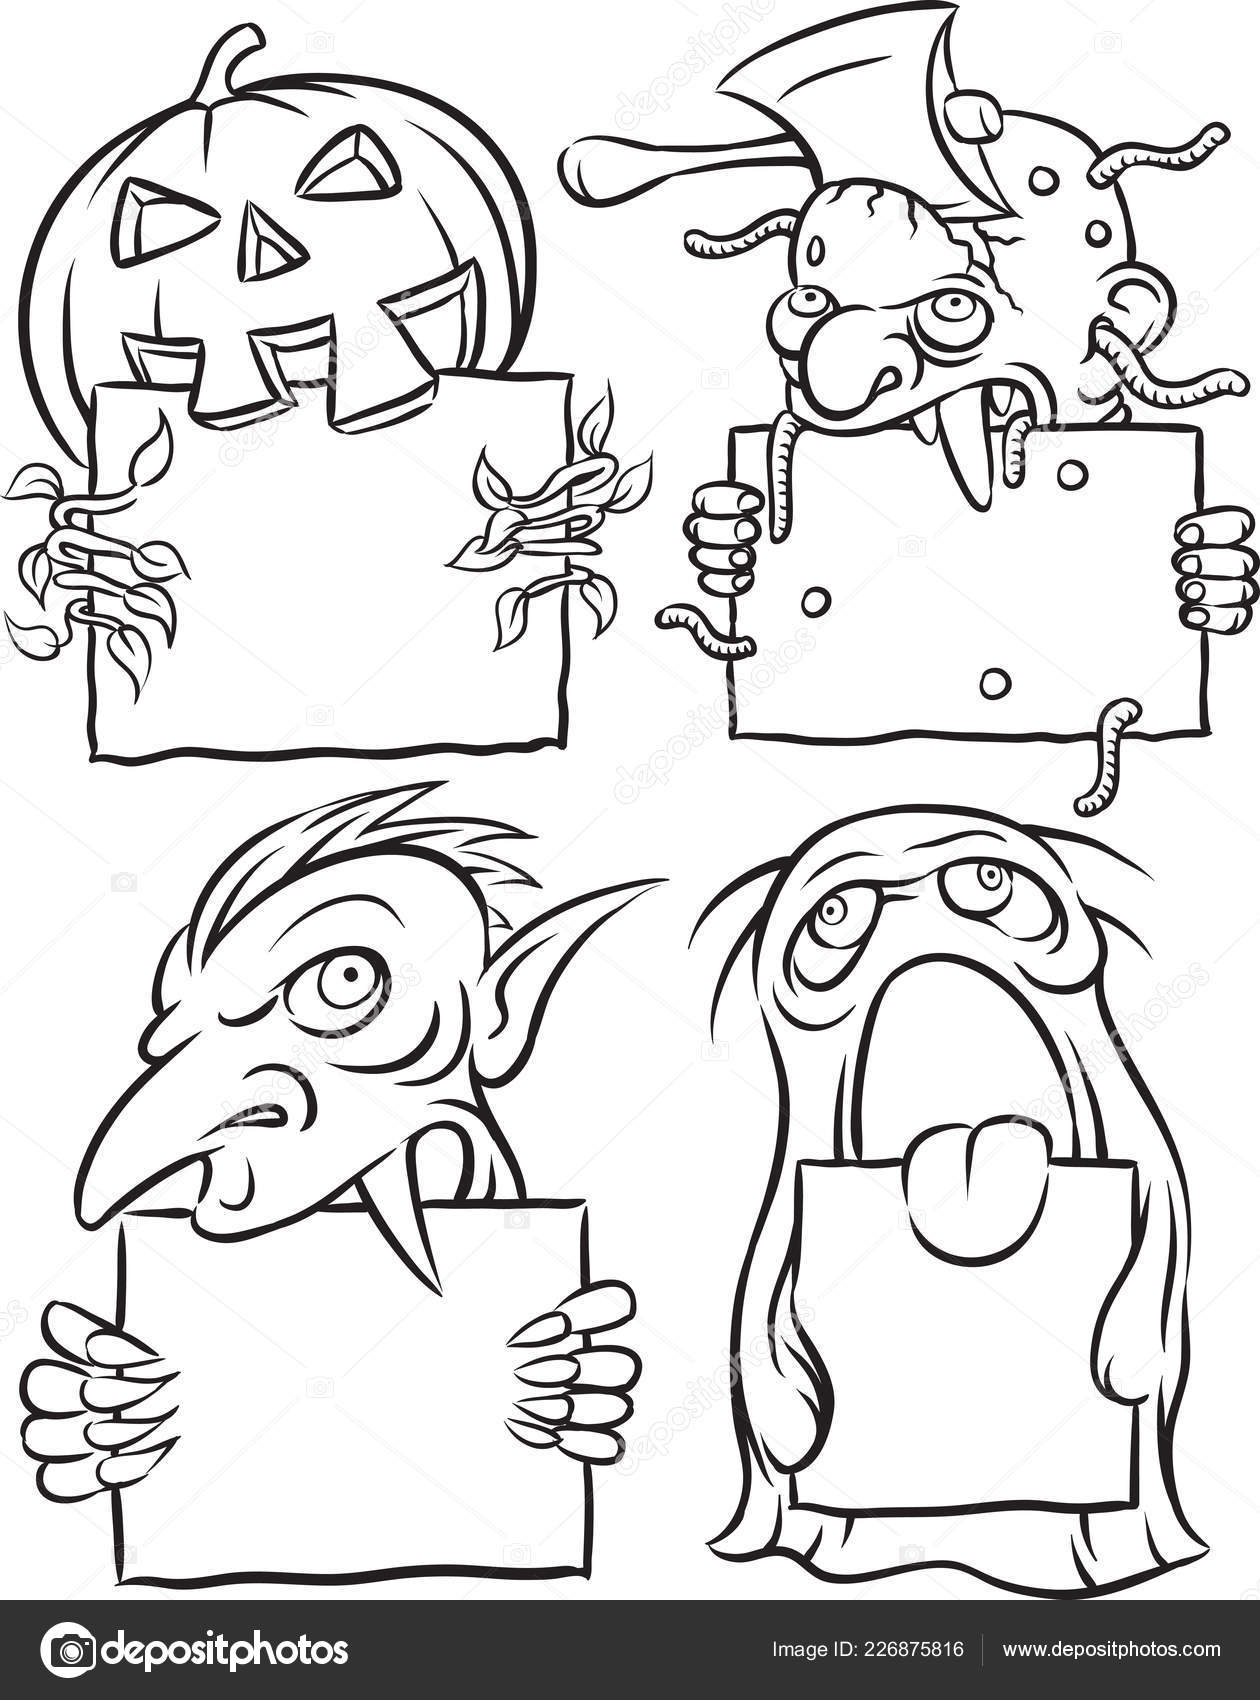 Whiteboard Drawing Halloween Monsters.